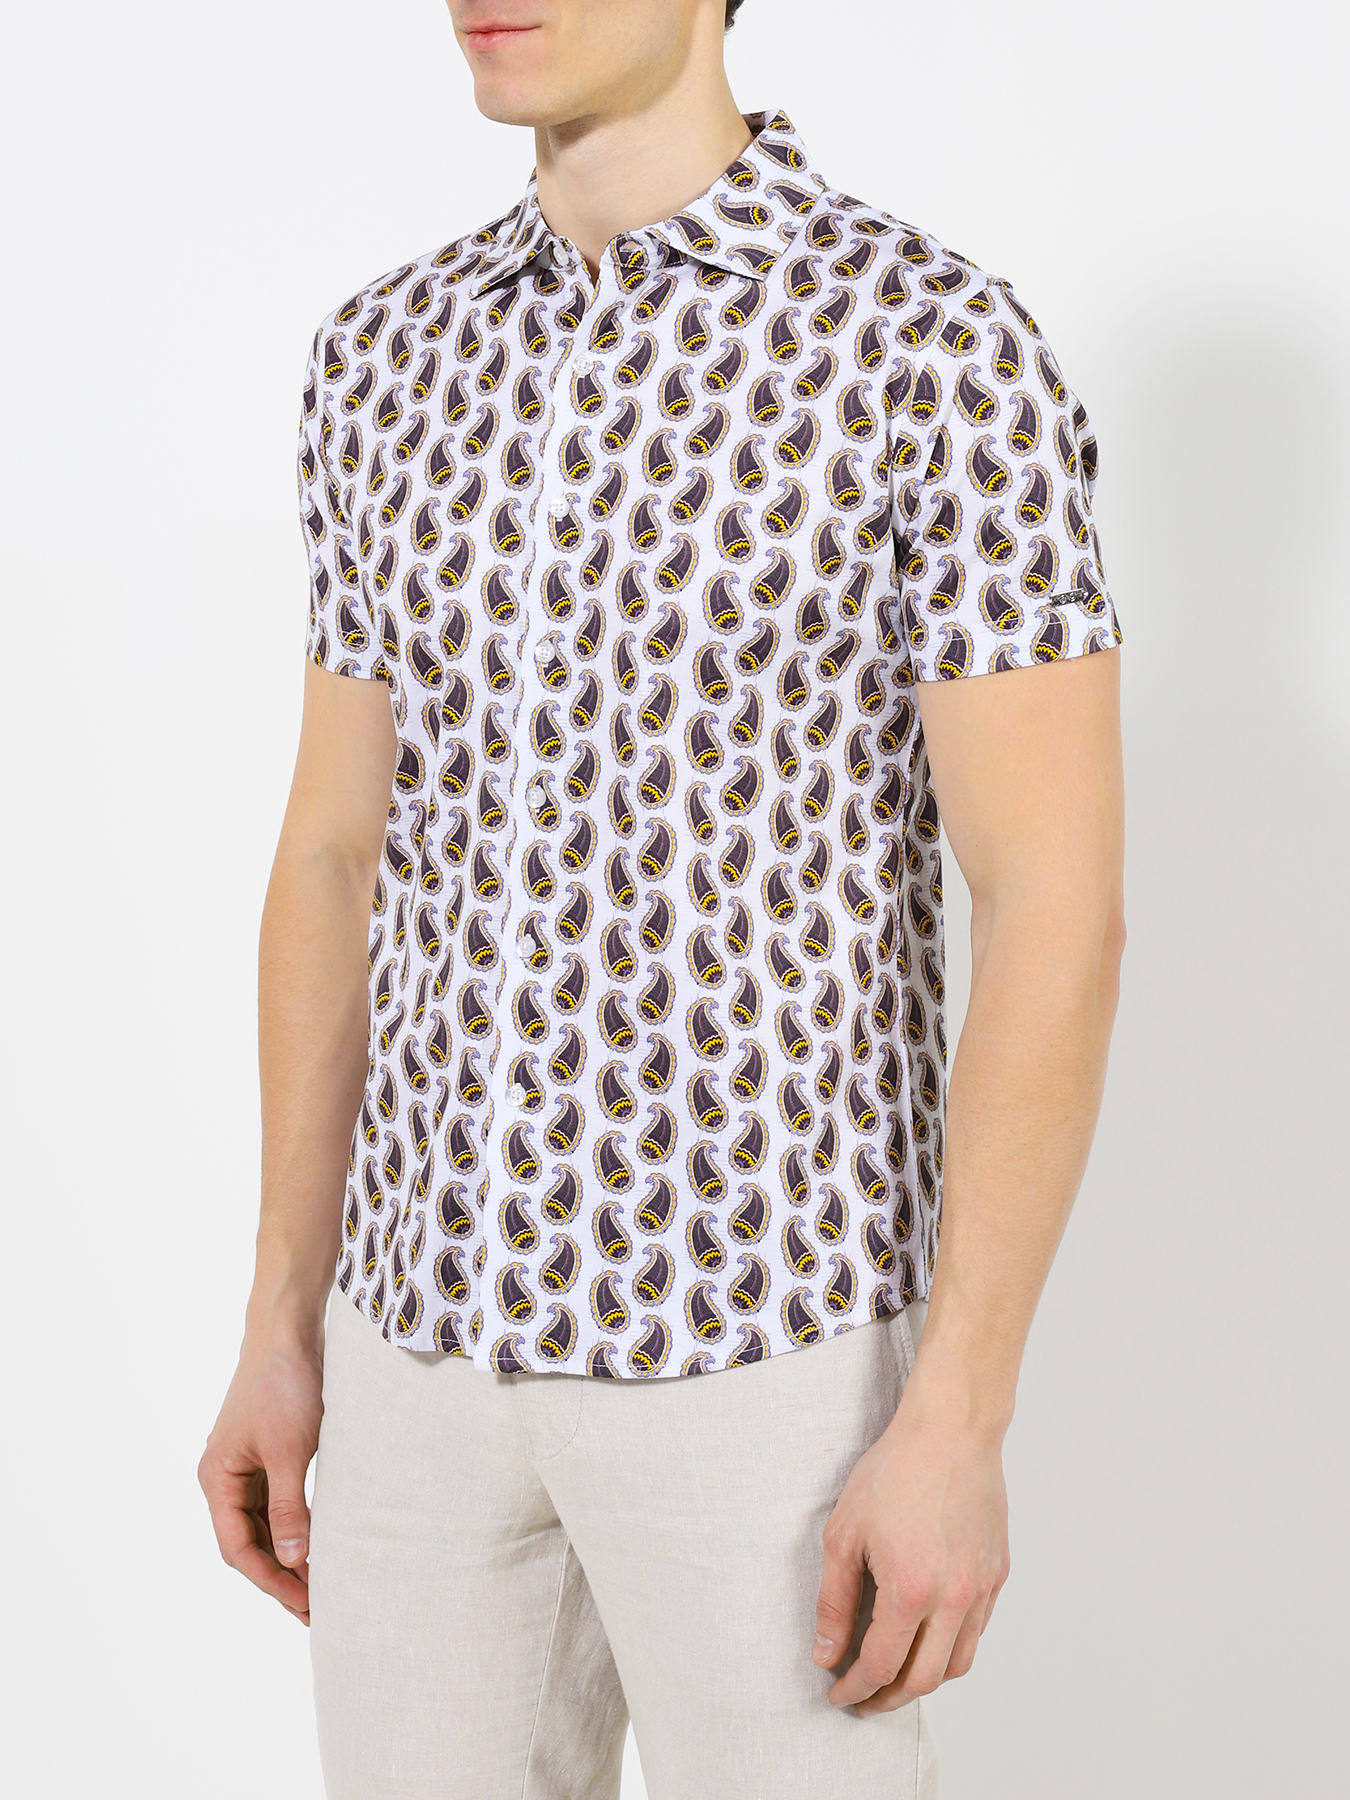 Хлопковая рубашка Alessandro Manzoni 356403-025, цвет мультиколор, размер 48 - фото 1